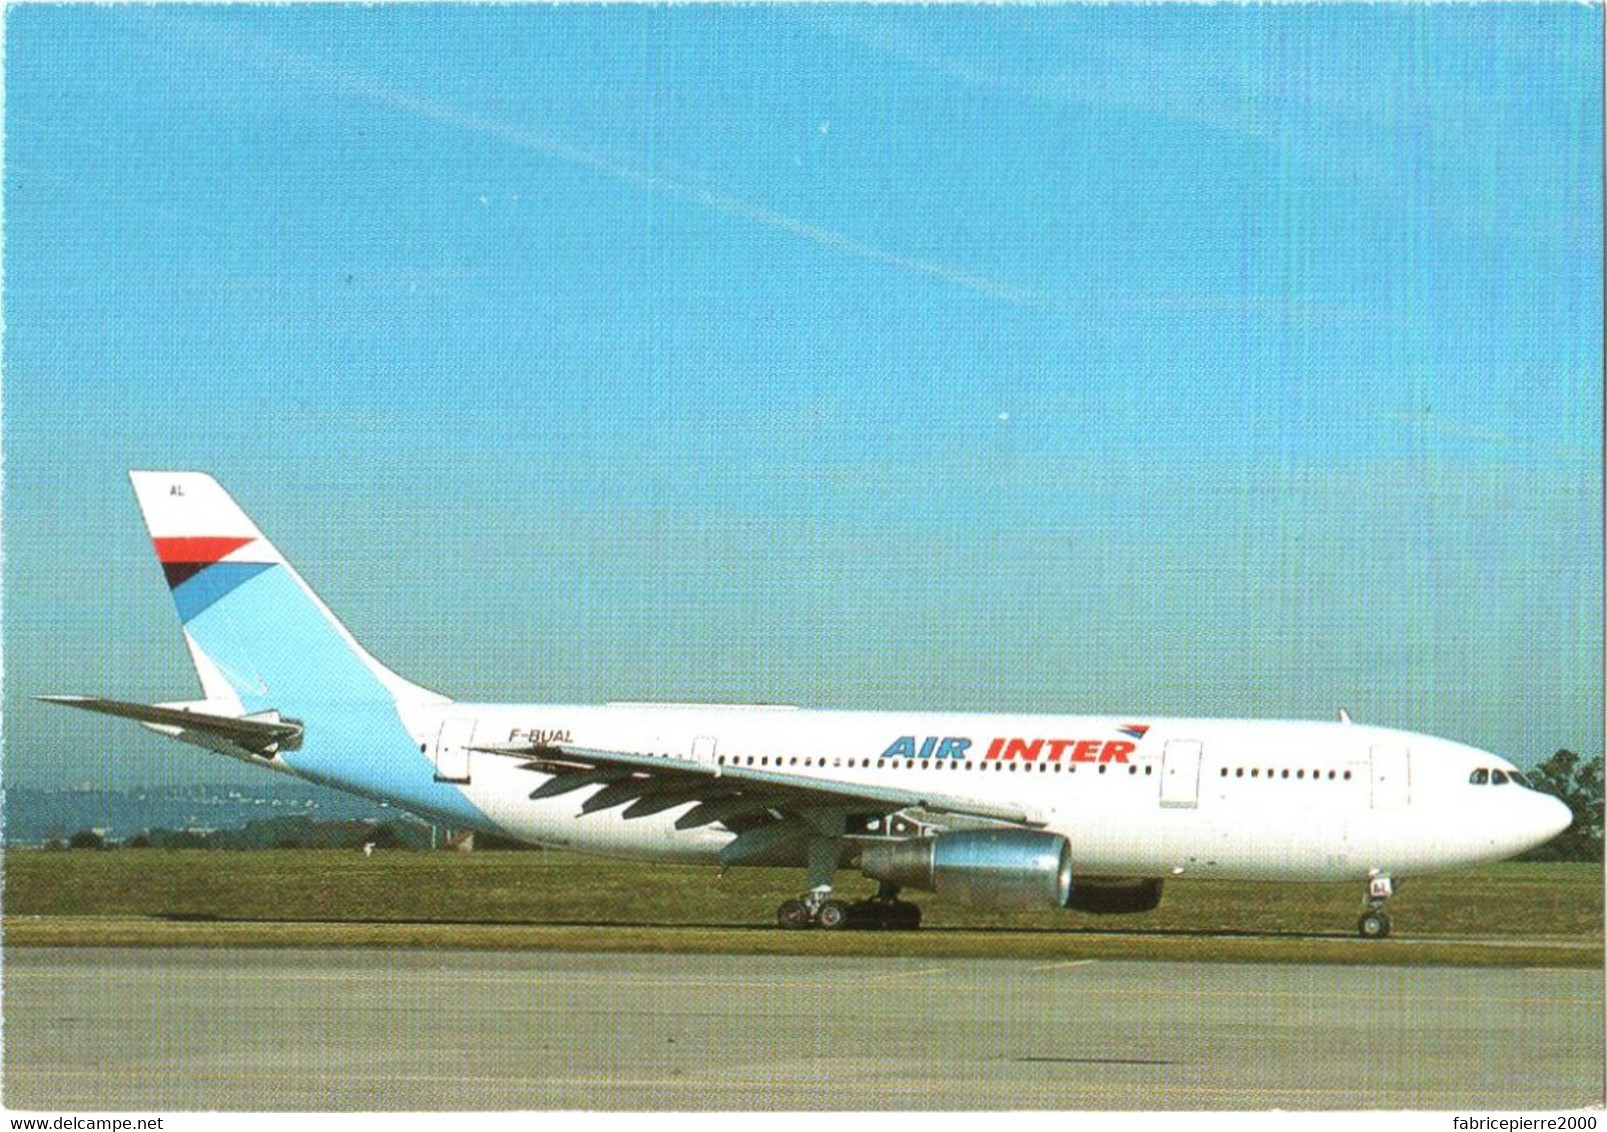 CPM 75 Paris - Aéroport De Paris-Orly. Airbus A-300 B2 (F-BUAL) D'AIR INTER TBE, Scan Recto Verso, Flamme SOS Amitiés - Flugwesen